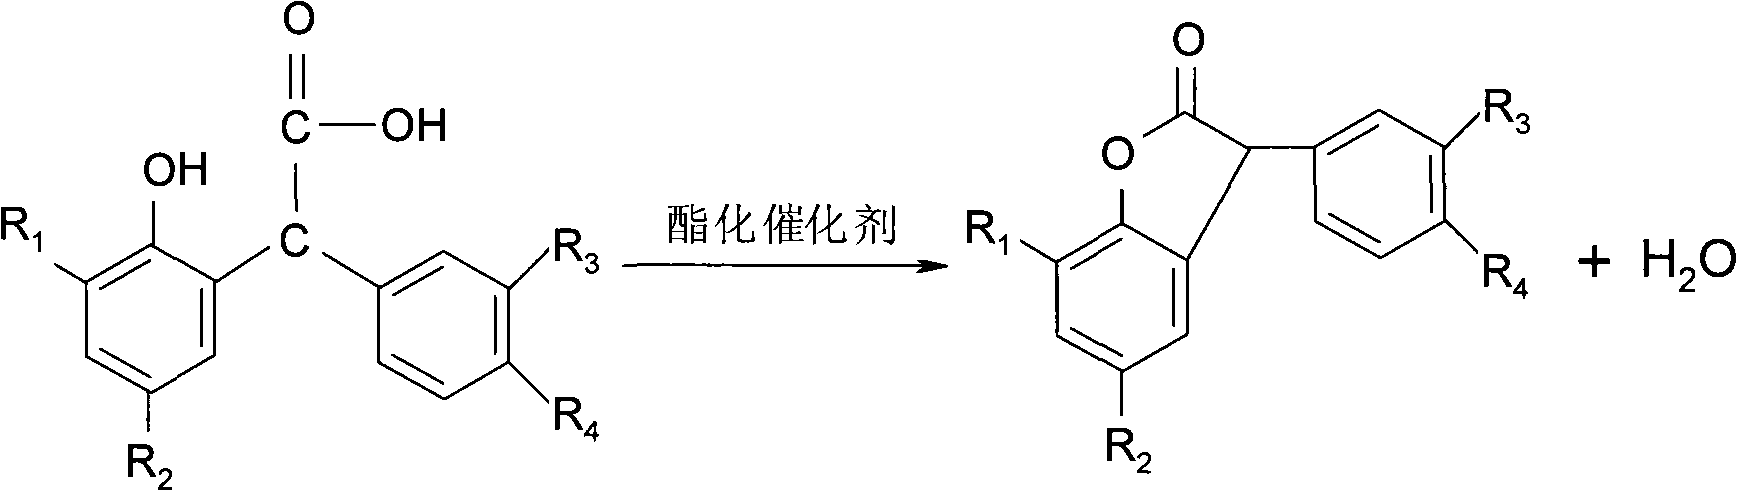 Method for preparing 3-arylbenzofuran ketone compounds